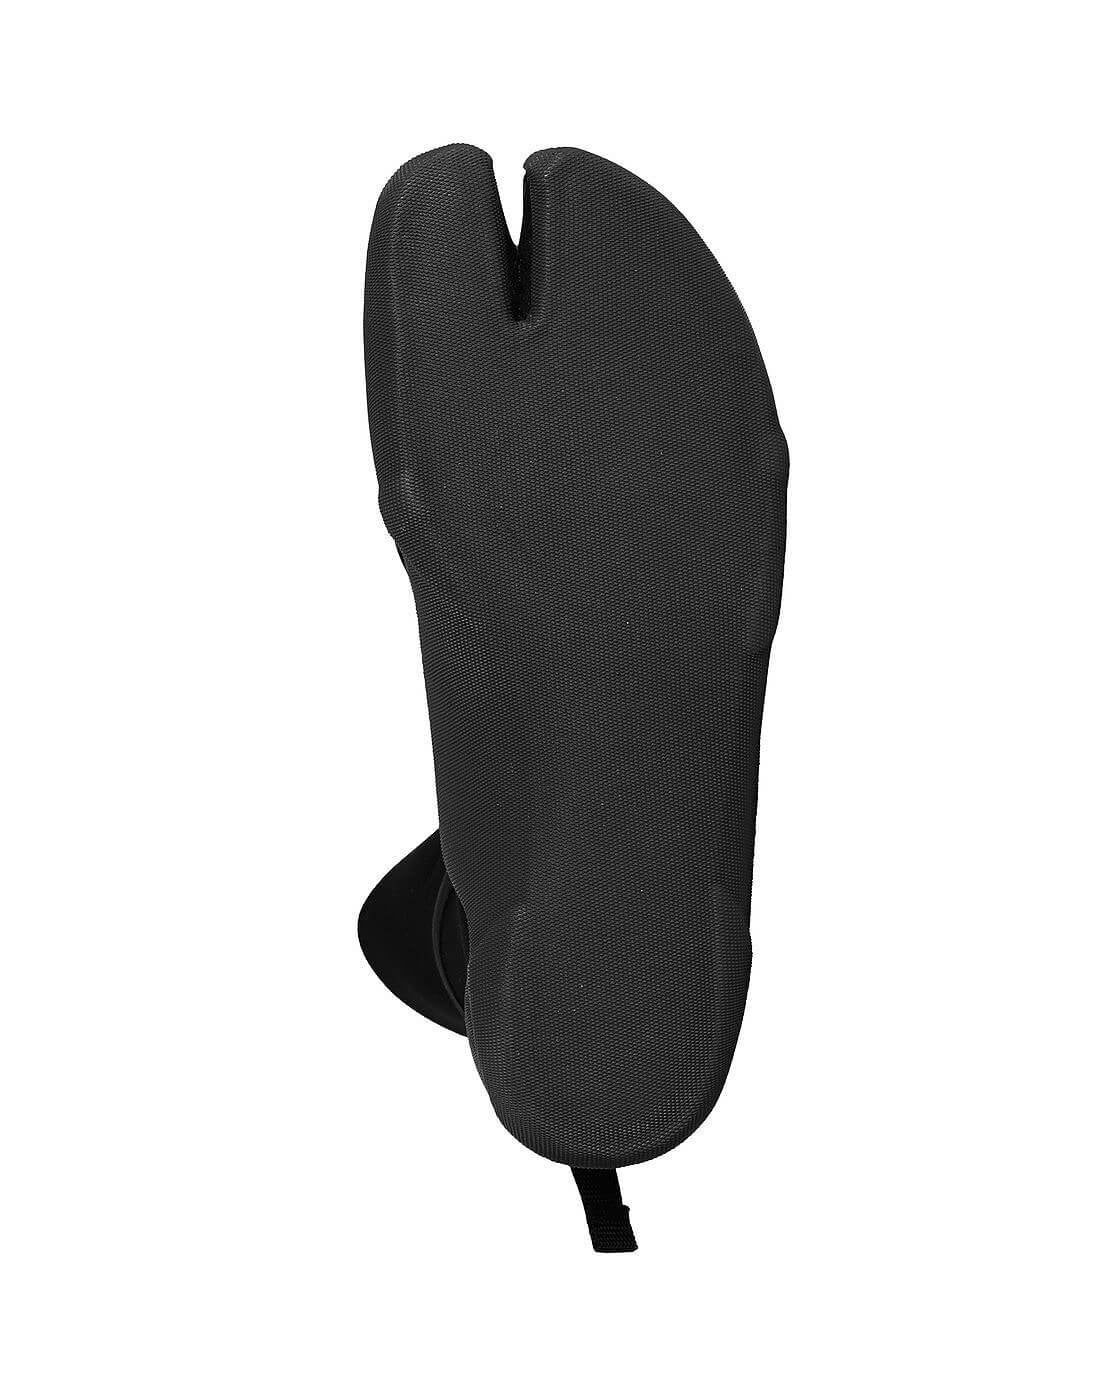 5mm Billabong FURNACE ABSOLUTE Split-Toe Wetsuit Boots - Sale